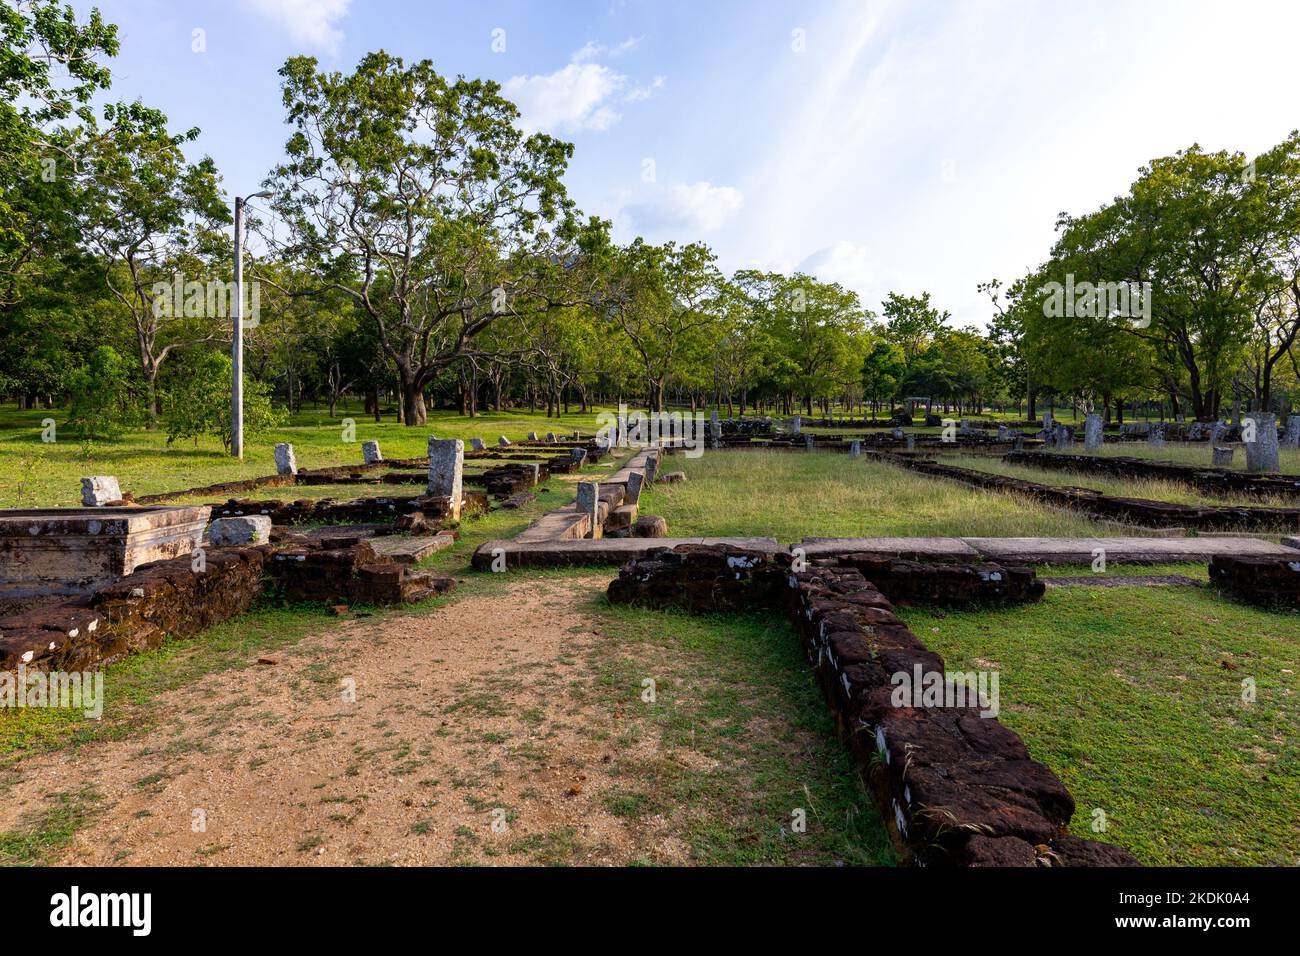 Ruinas de un templo budista, Anuradhapura ciudad sagrada, Sri Lanka Foto de stock